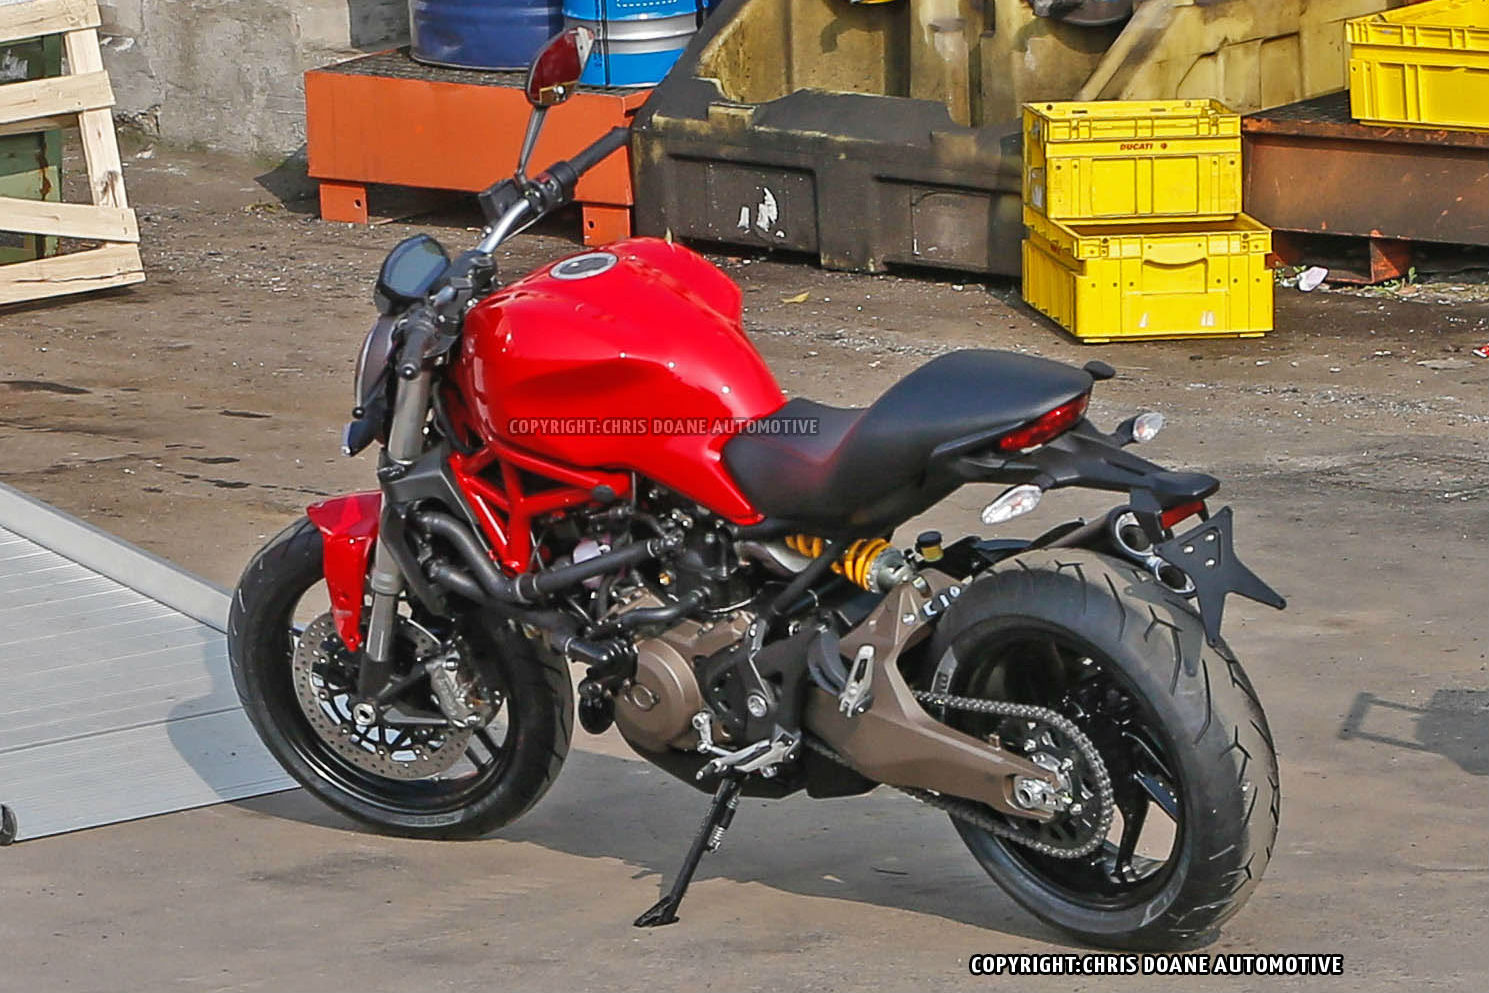 Spy shots: Ducati Monster 800 spotted